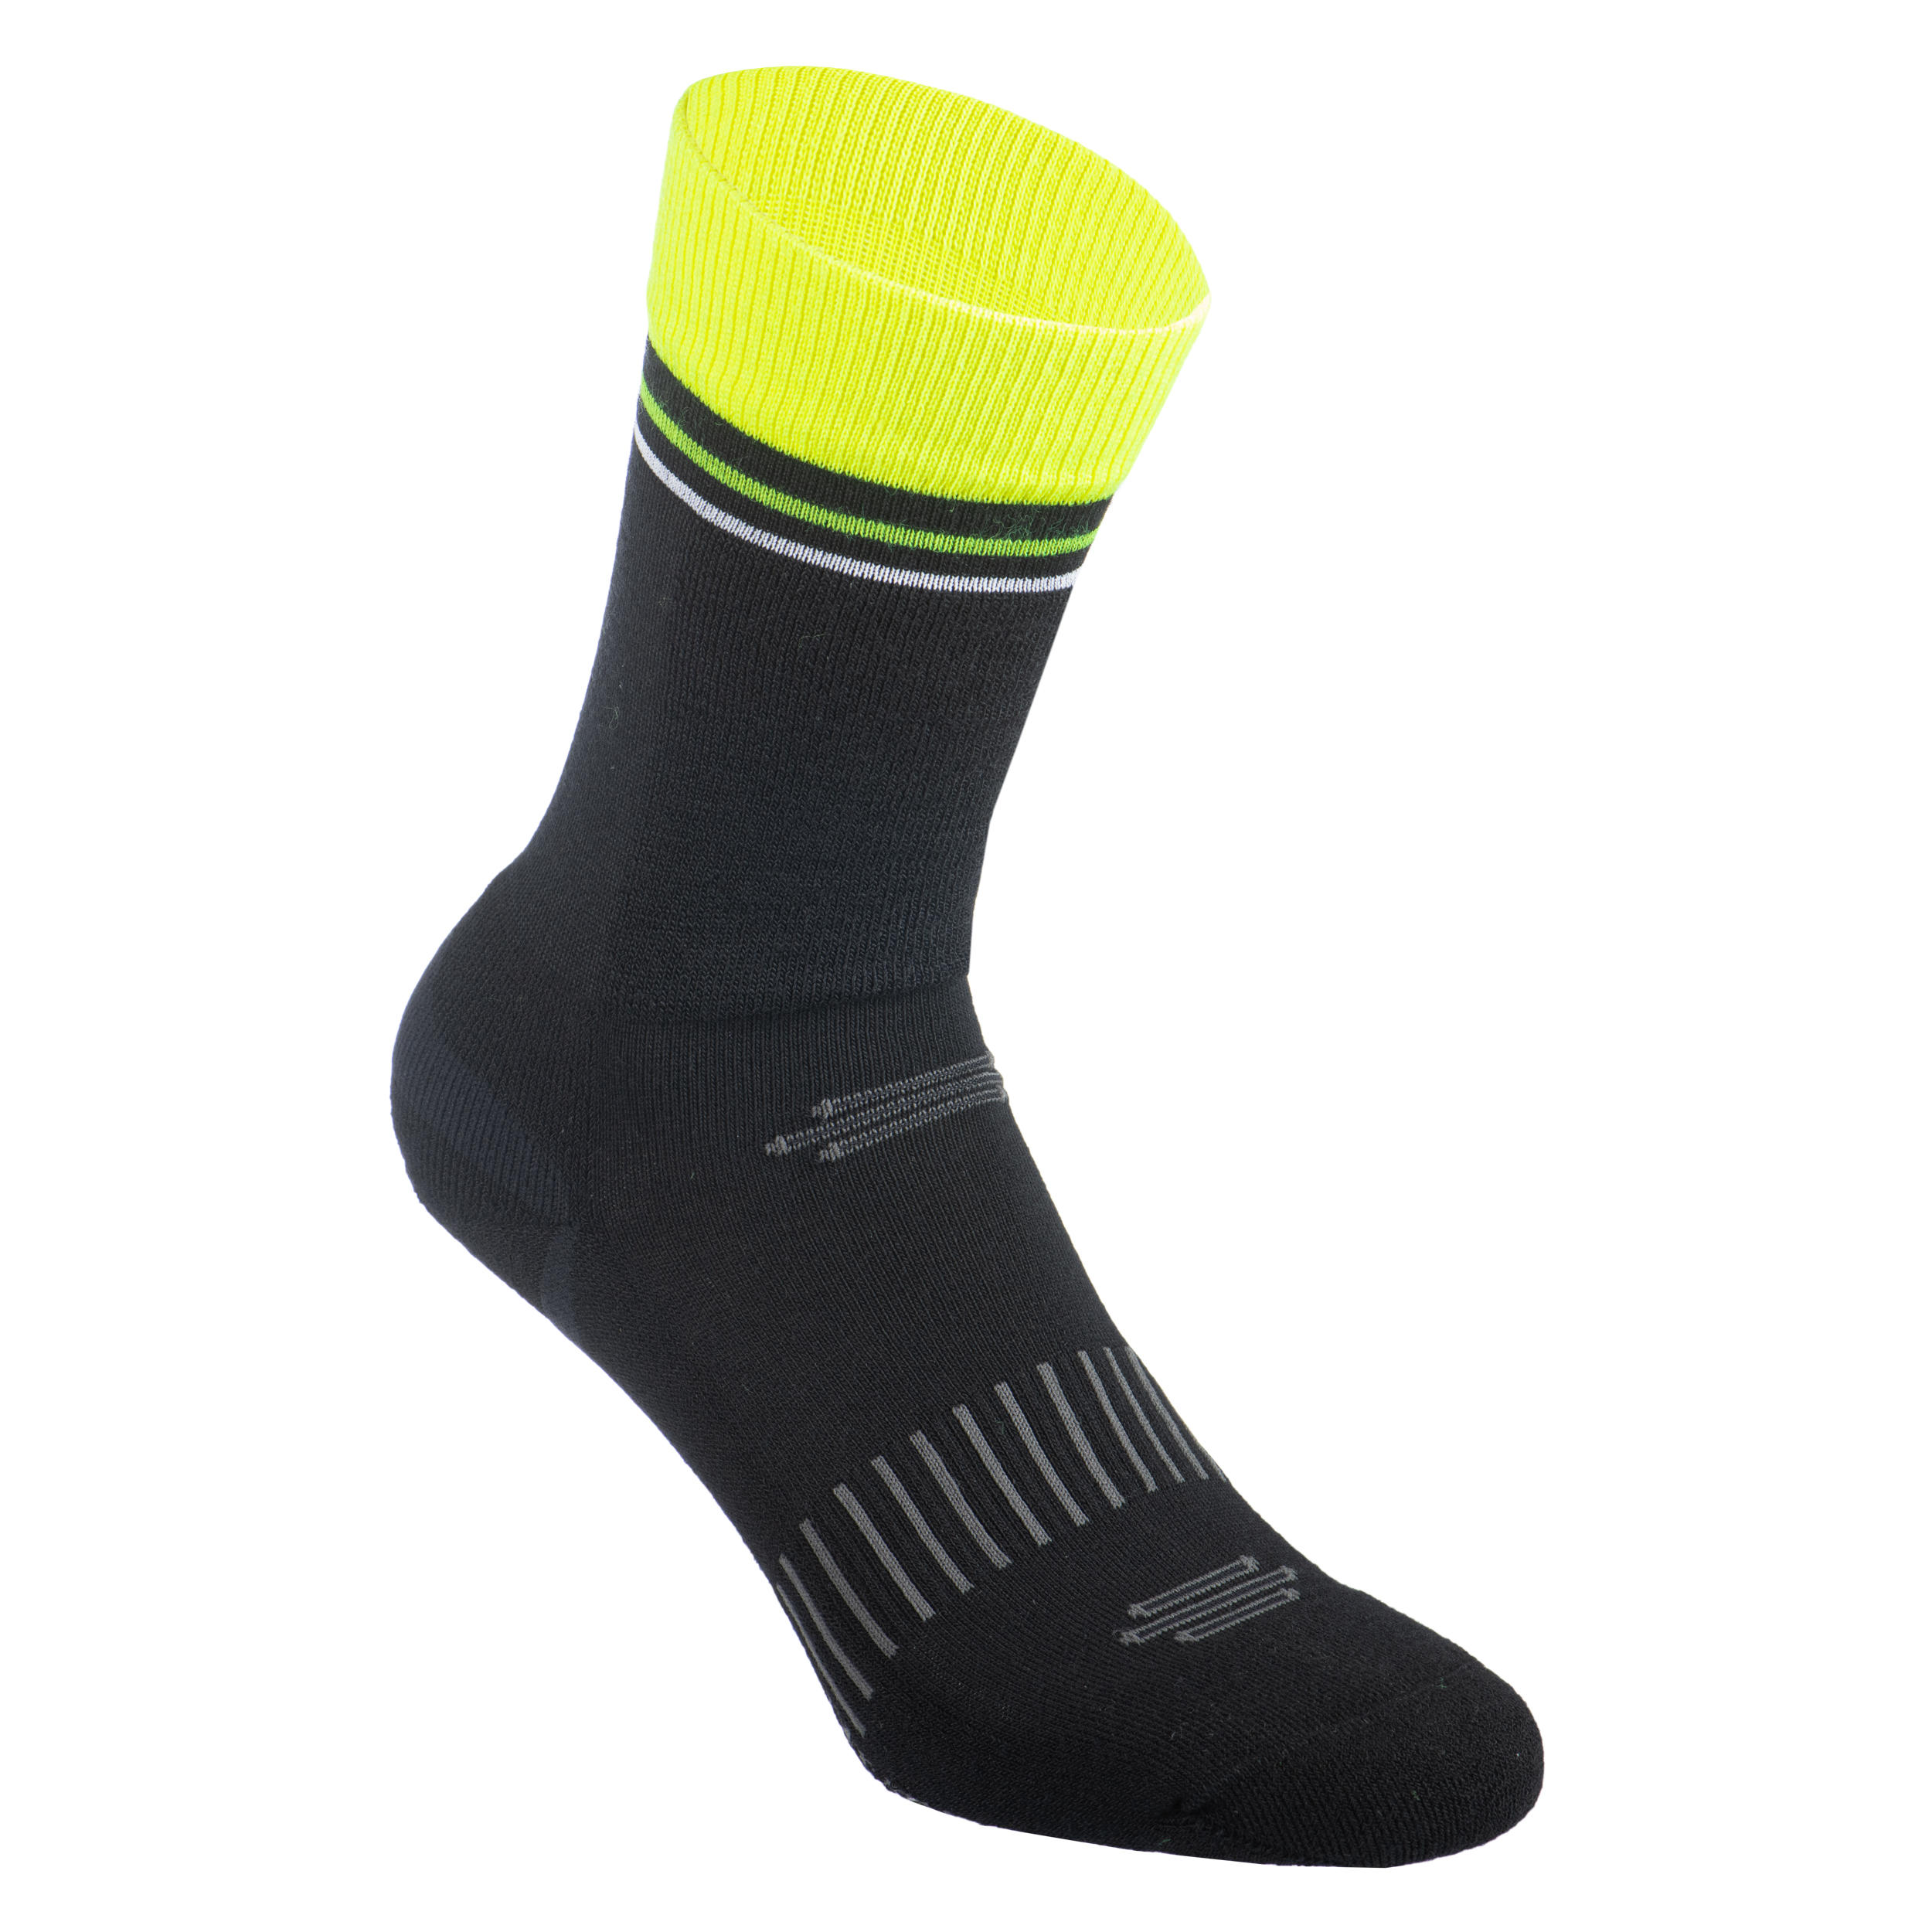 VAN RYSEL 900 Winter Cycling Socks - Black/Yellow